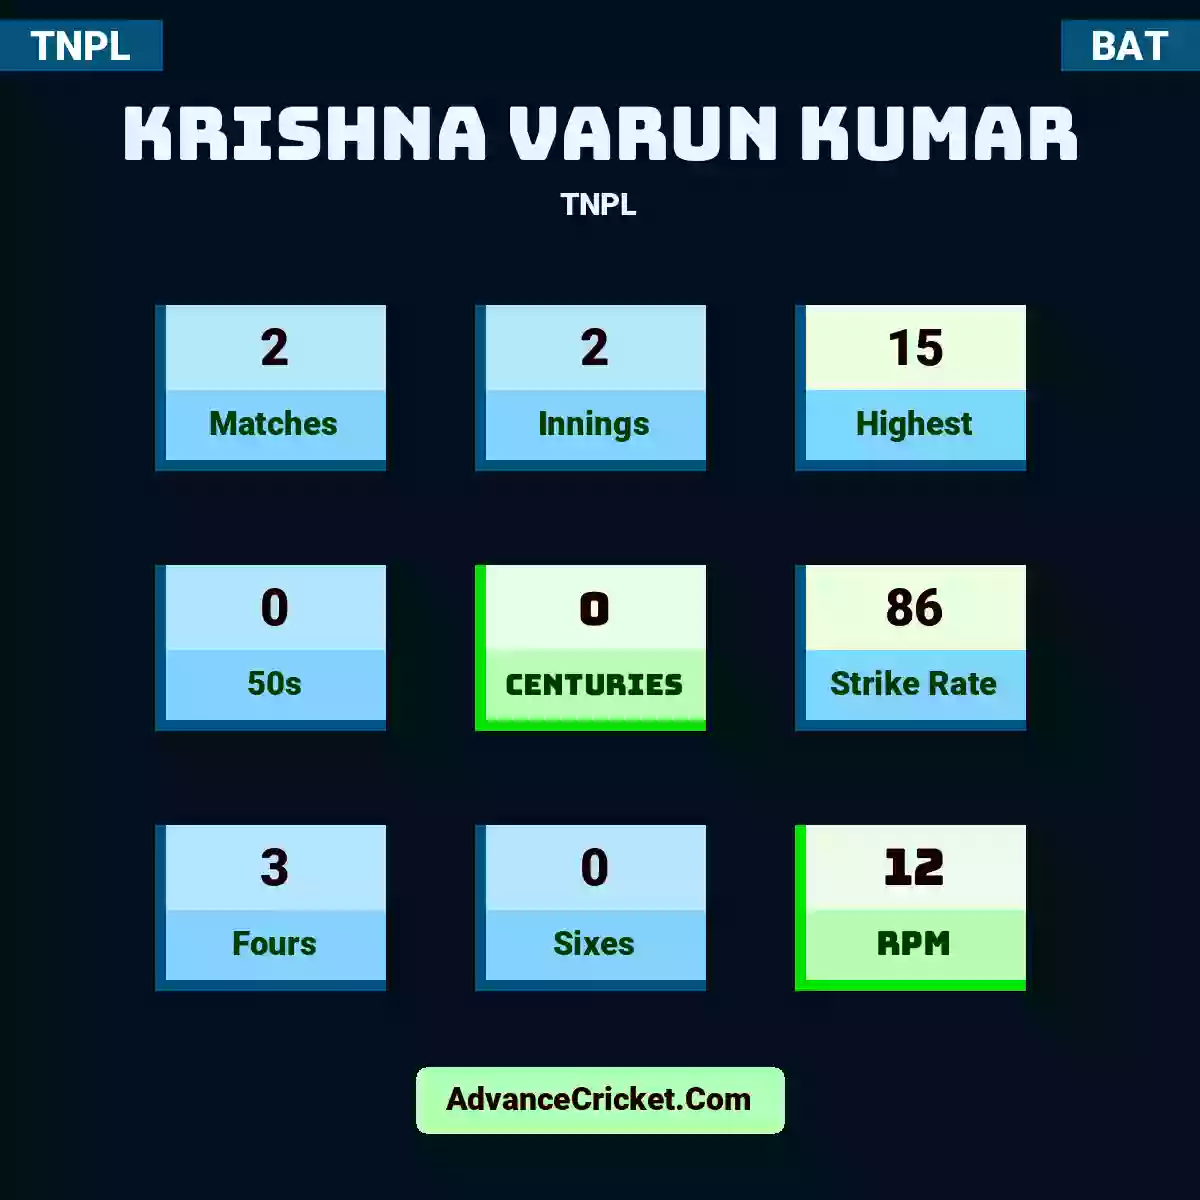 Krishna Varun Kumar TNPL , Krishna Varun Kumar played 2 matches, scored 15 runs as highest, 0 half-centuries, and 0 centuries, with a strike rate of 86. K.Kumar hit 3 fours and 0 sixes, with an RPM of 12.